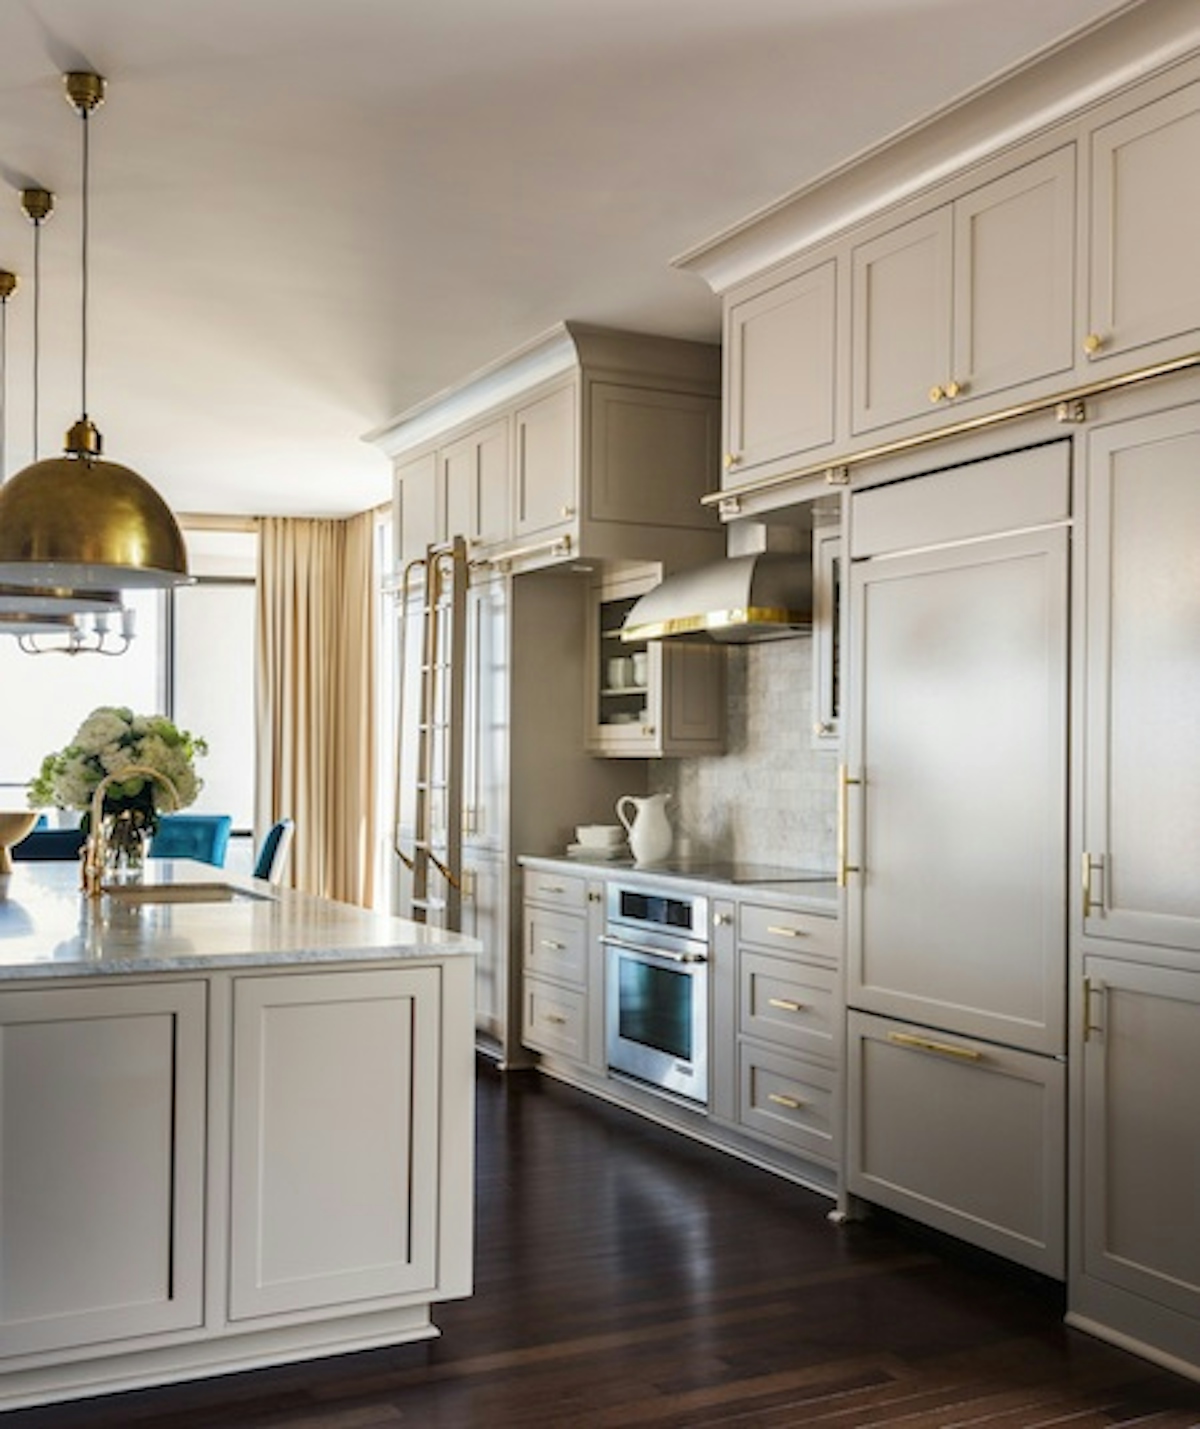 9 Classy Interior Design Ideas to Improve Your Home | LuxDeco.com Style Guide